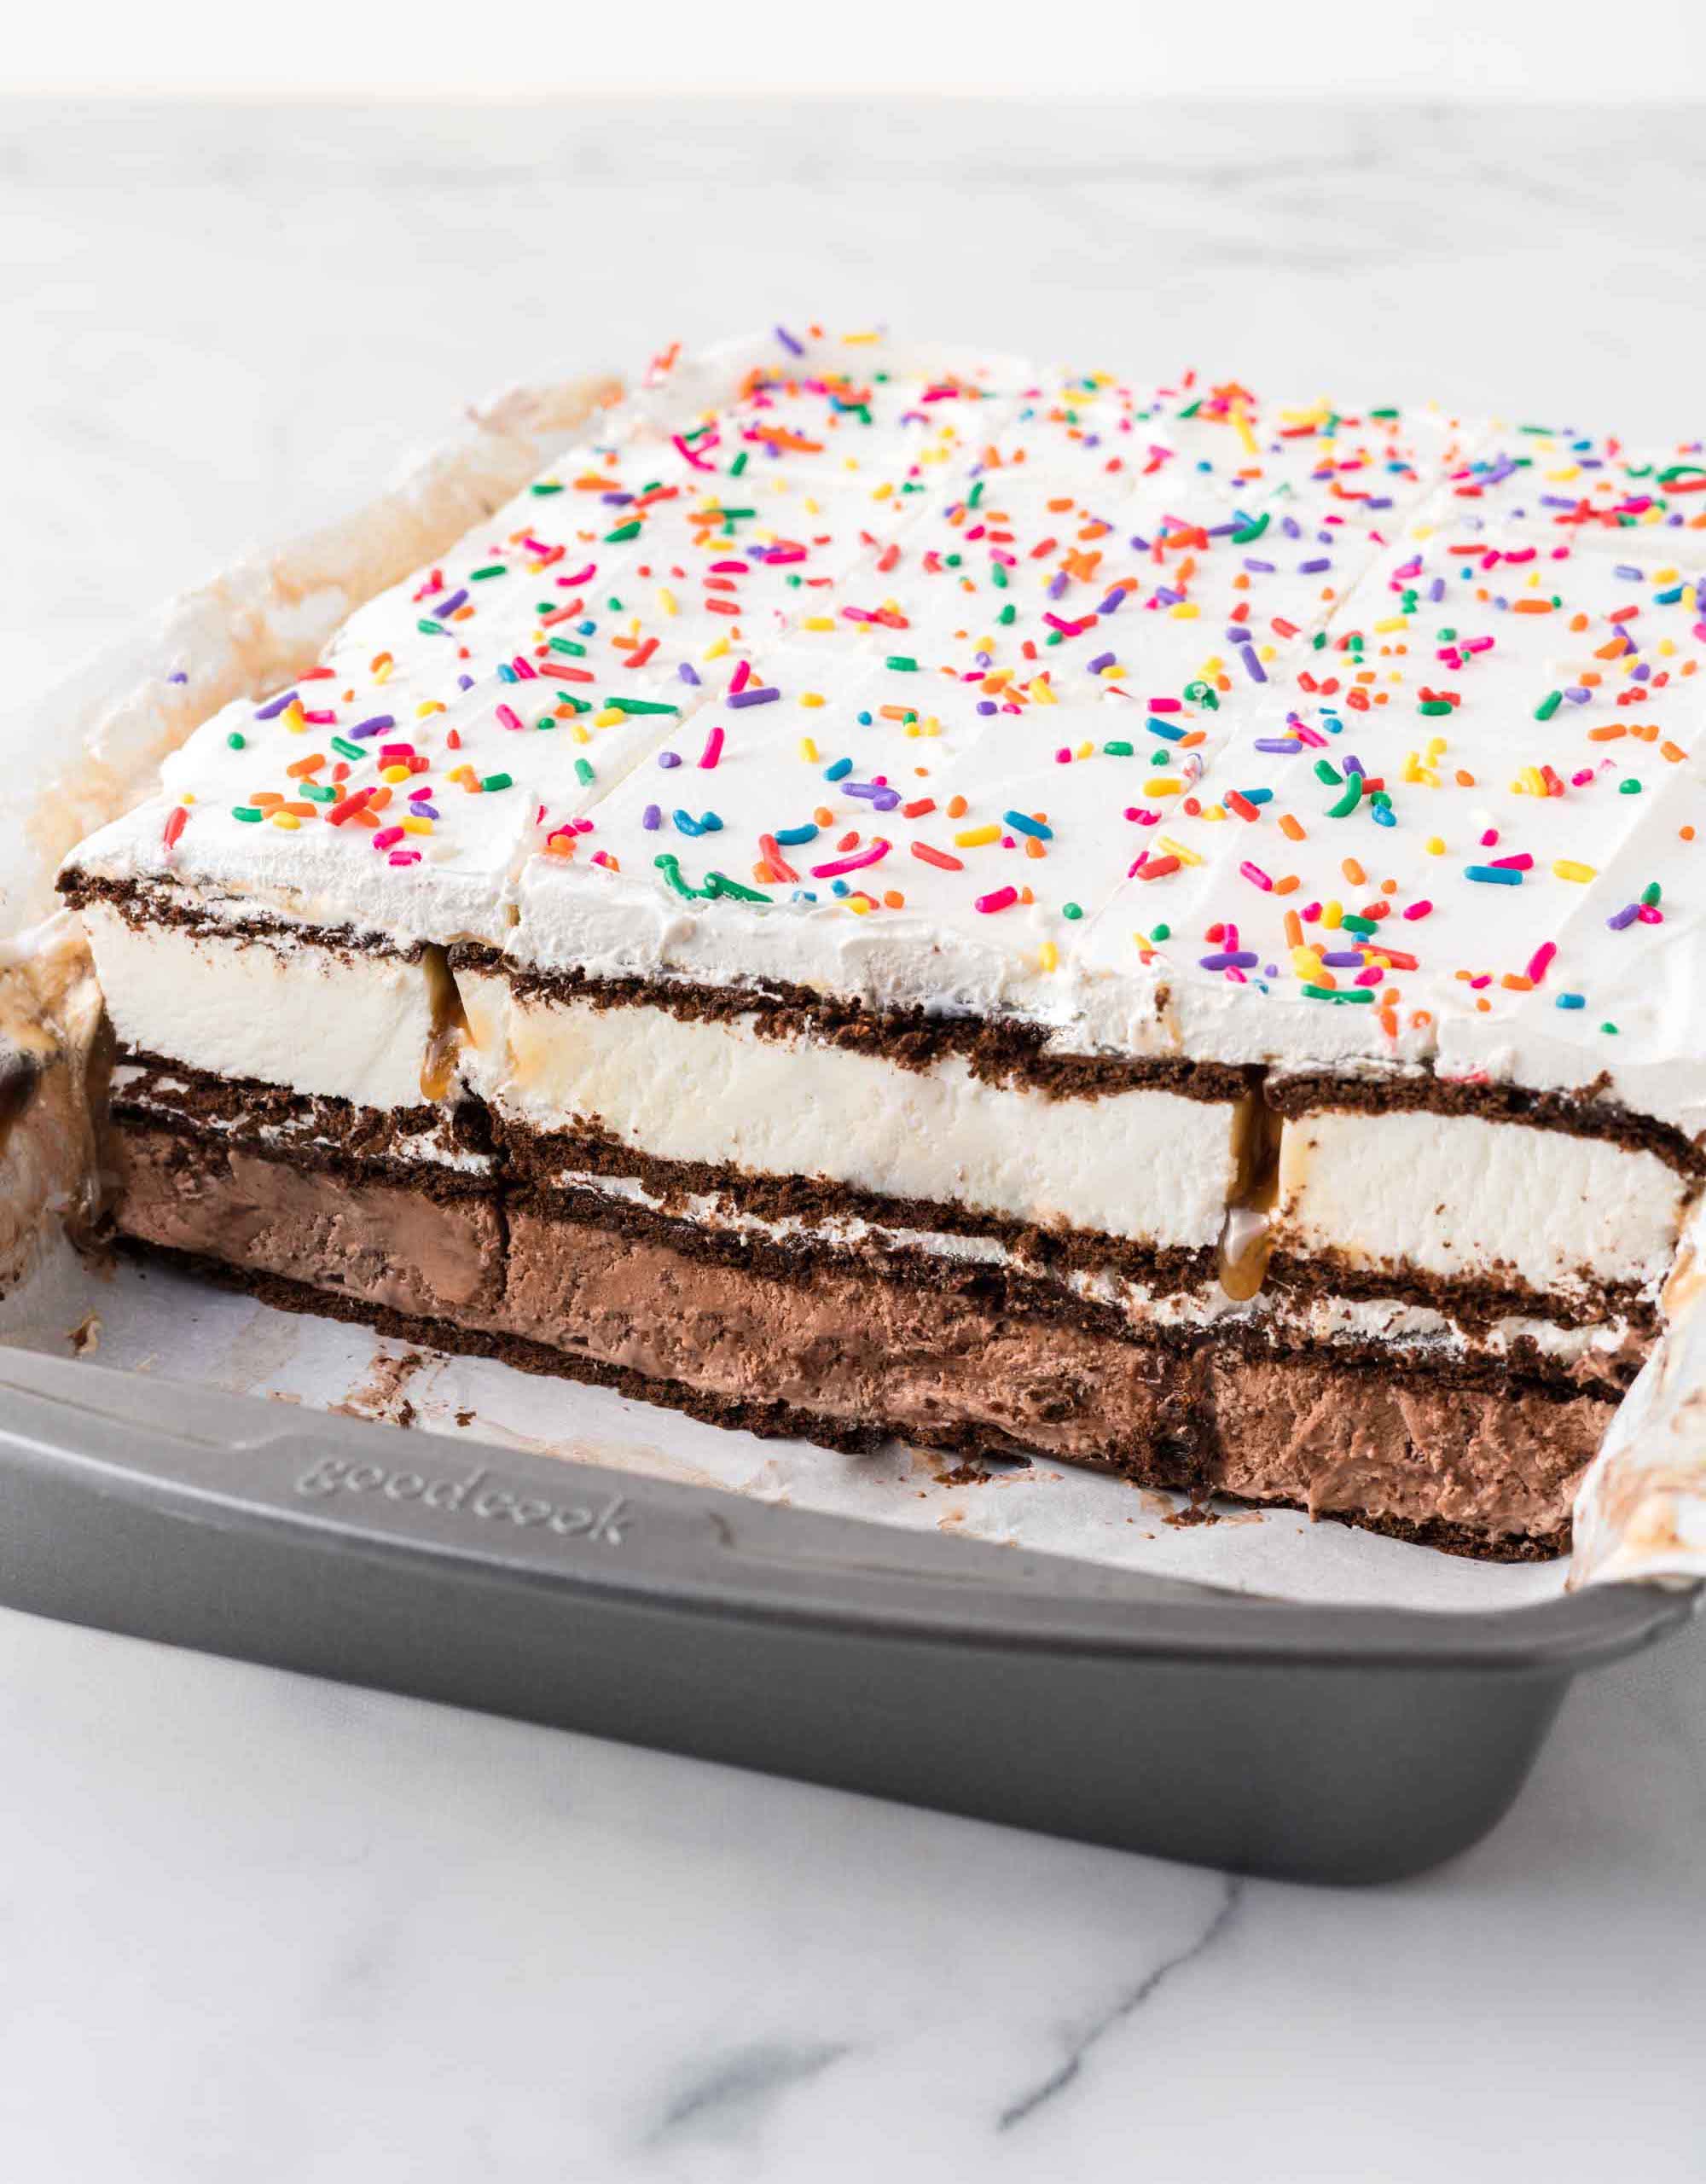 Cut ice cream sandwich cake in pan, showing layers